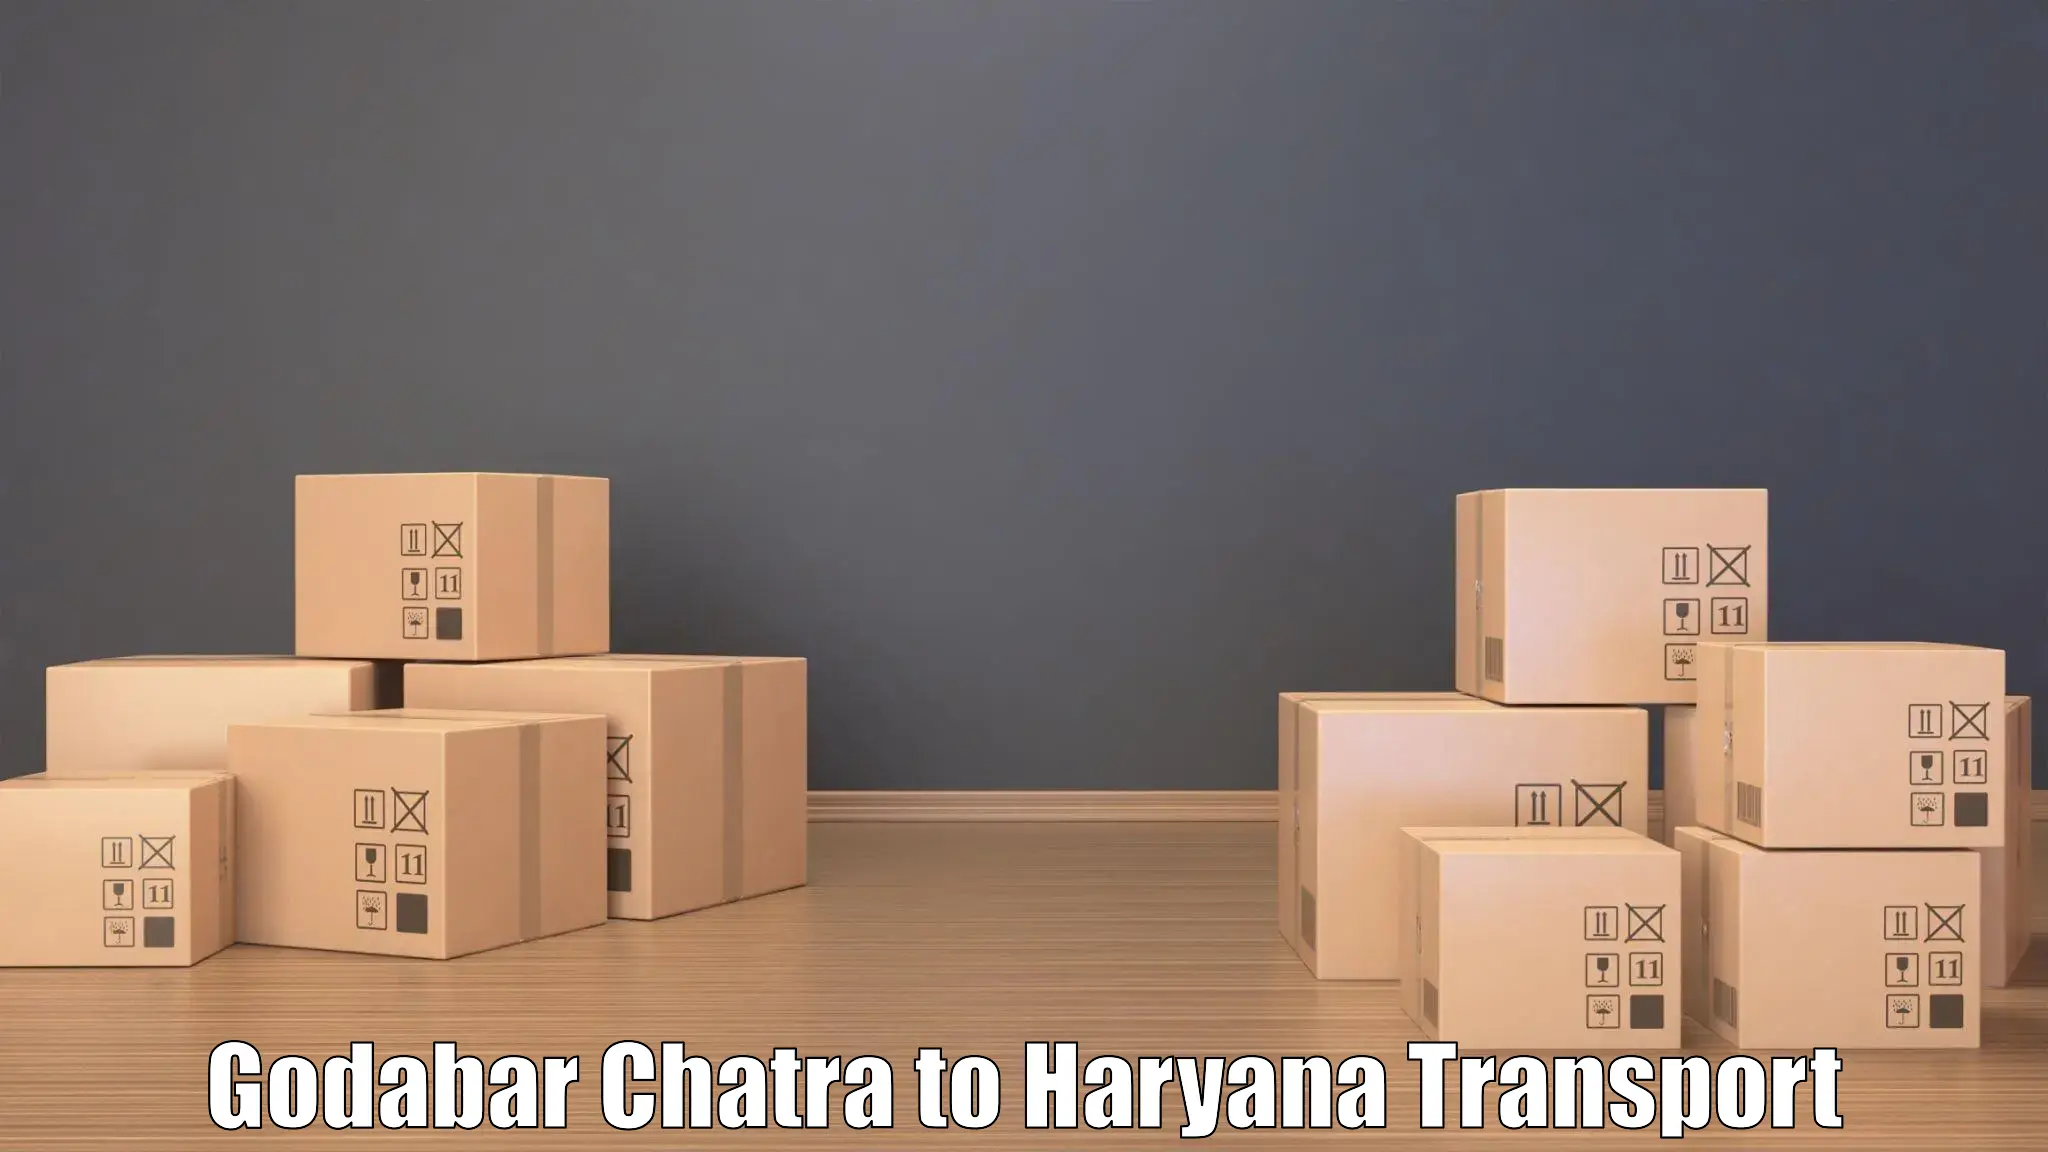 Truck transport companies in India Godabar Chatra to Julana